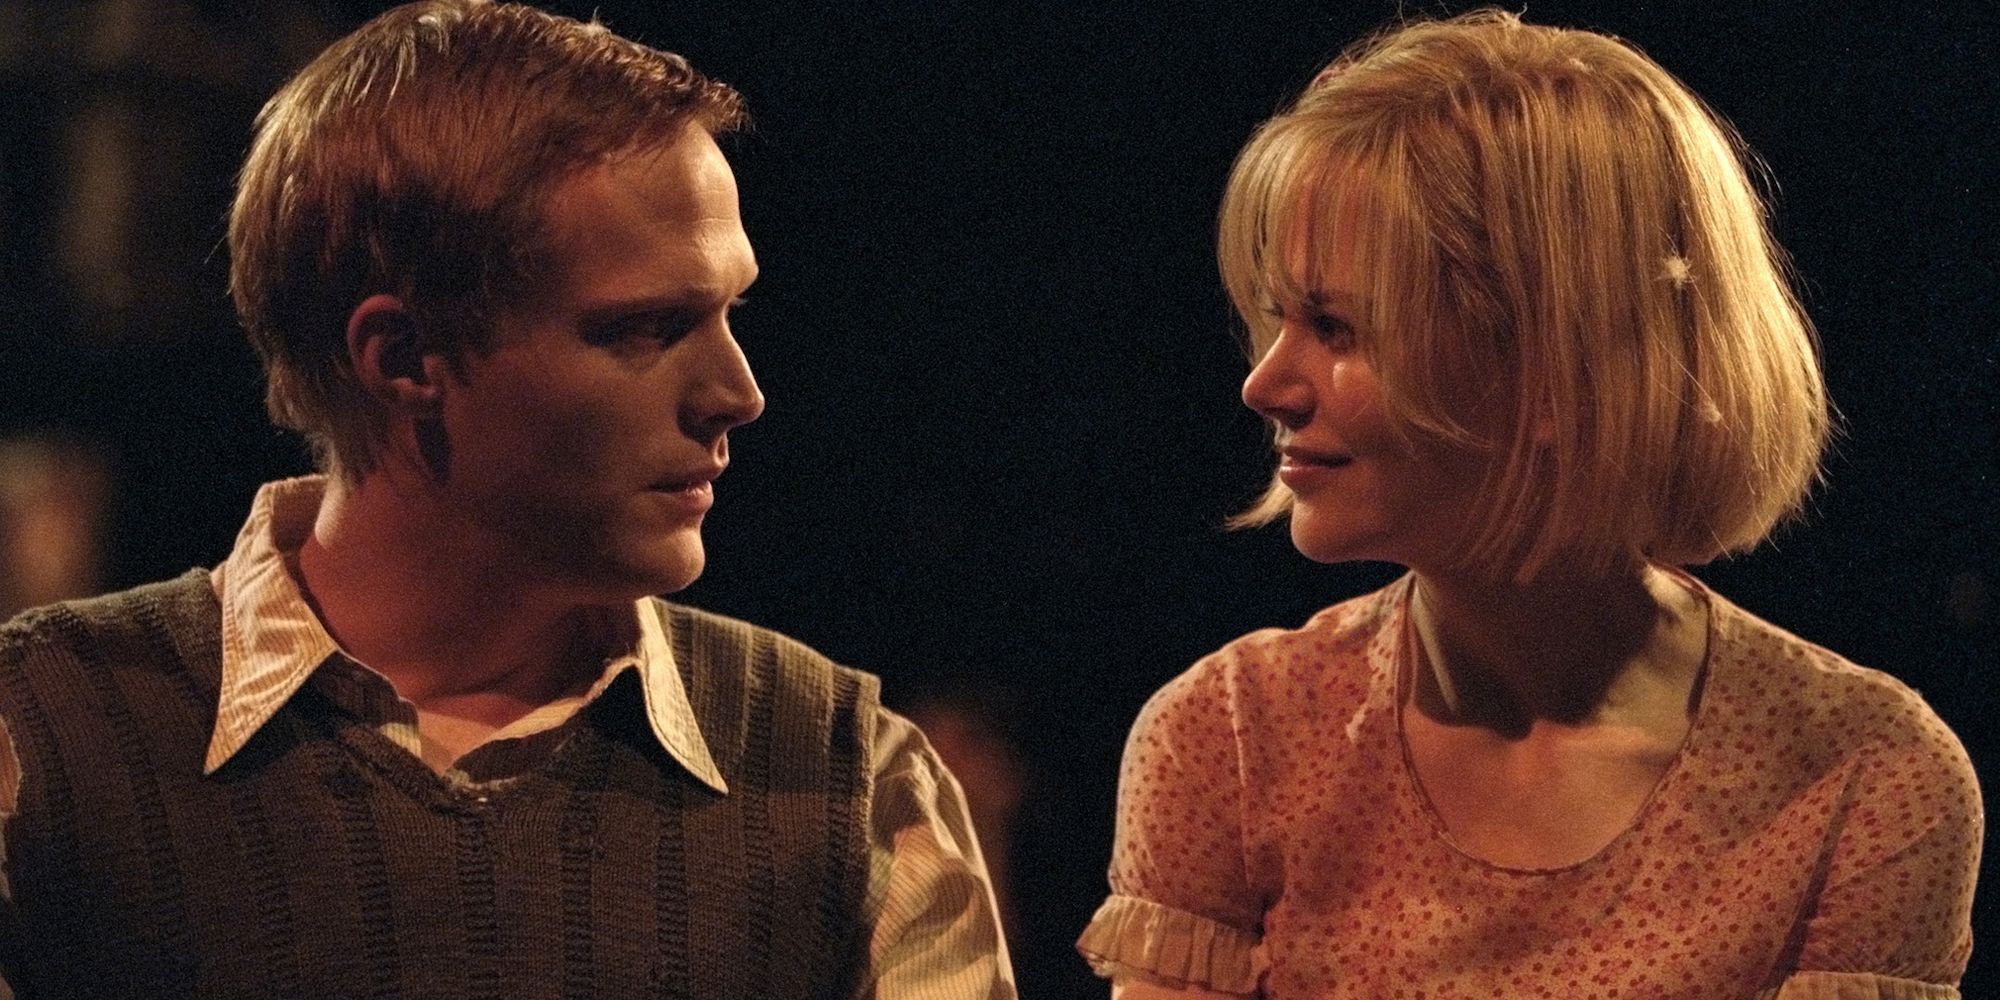 Tom Edison (Paul Bettany) looks to Grace Margaret Mulligan (Nicole Kidman) who smiles back at him.